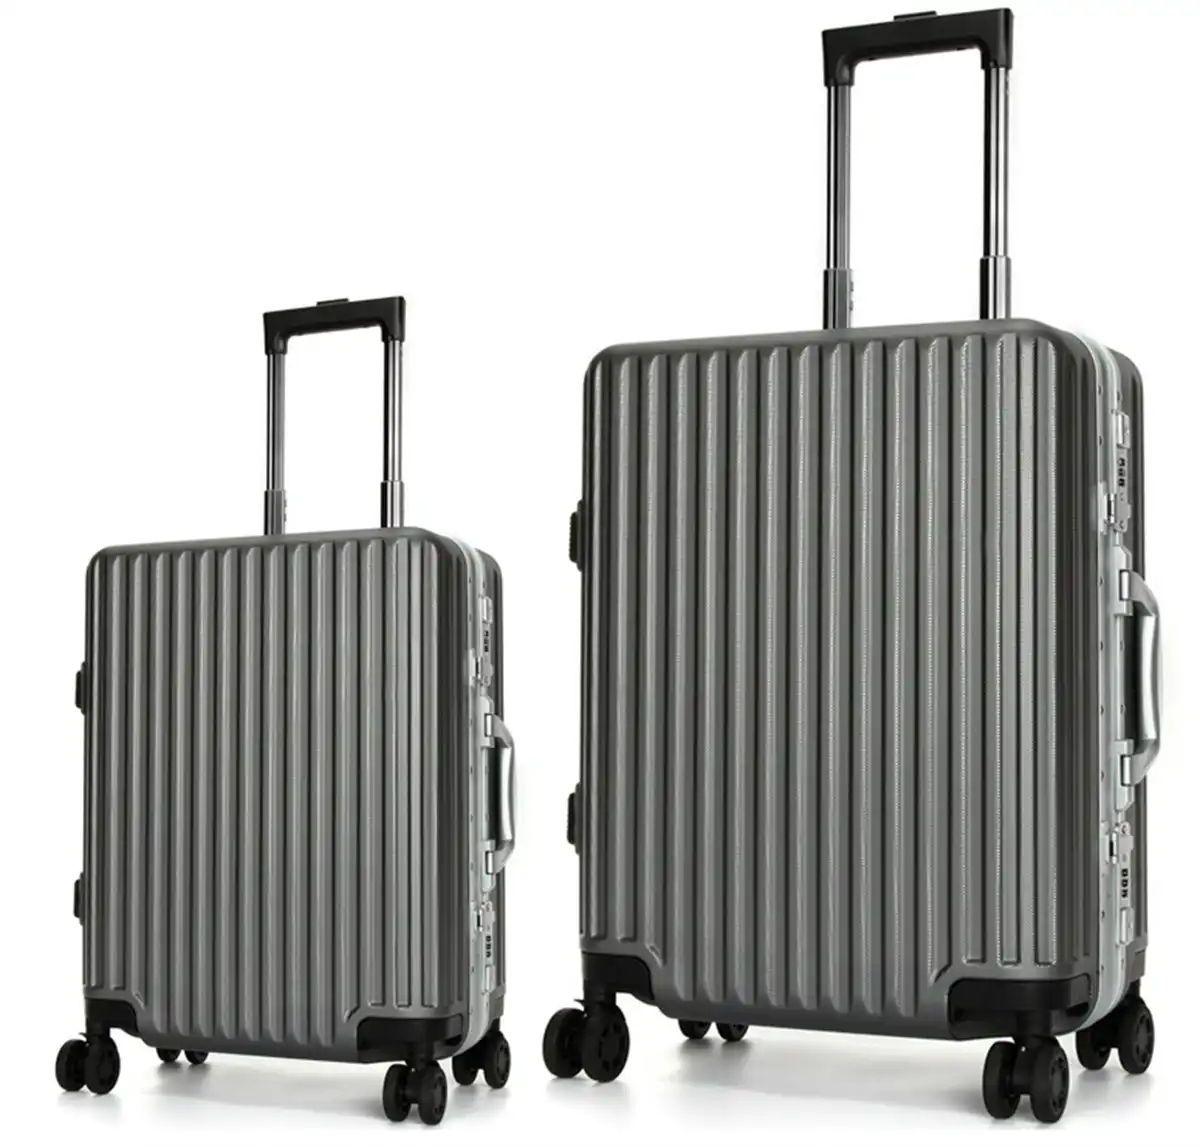 Suissewin Swiss Aluminium Luggage Suitcase Lightweight With TSA Locker 8 Wheels Hardcase 2 Pieces Set SN7619 Grey